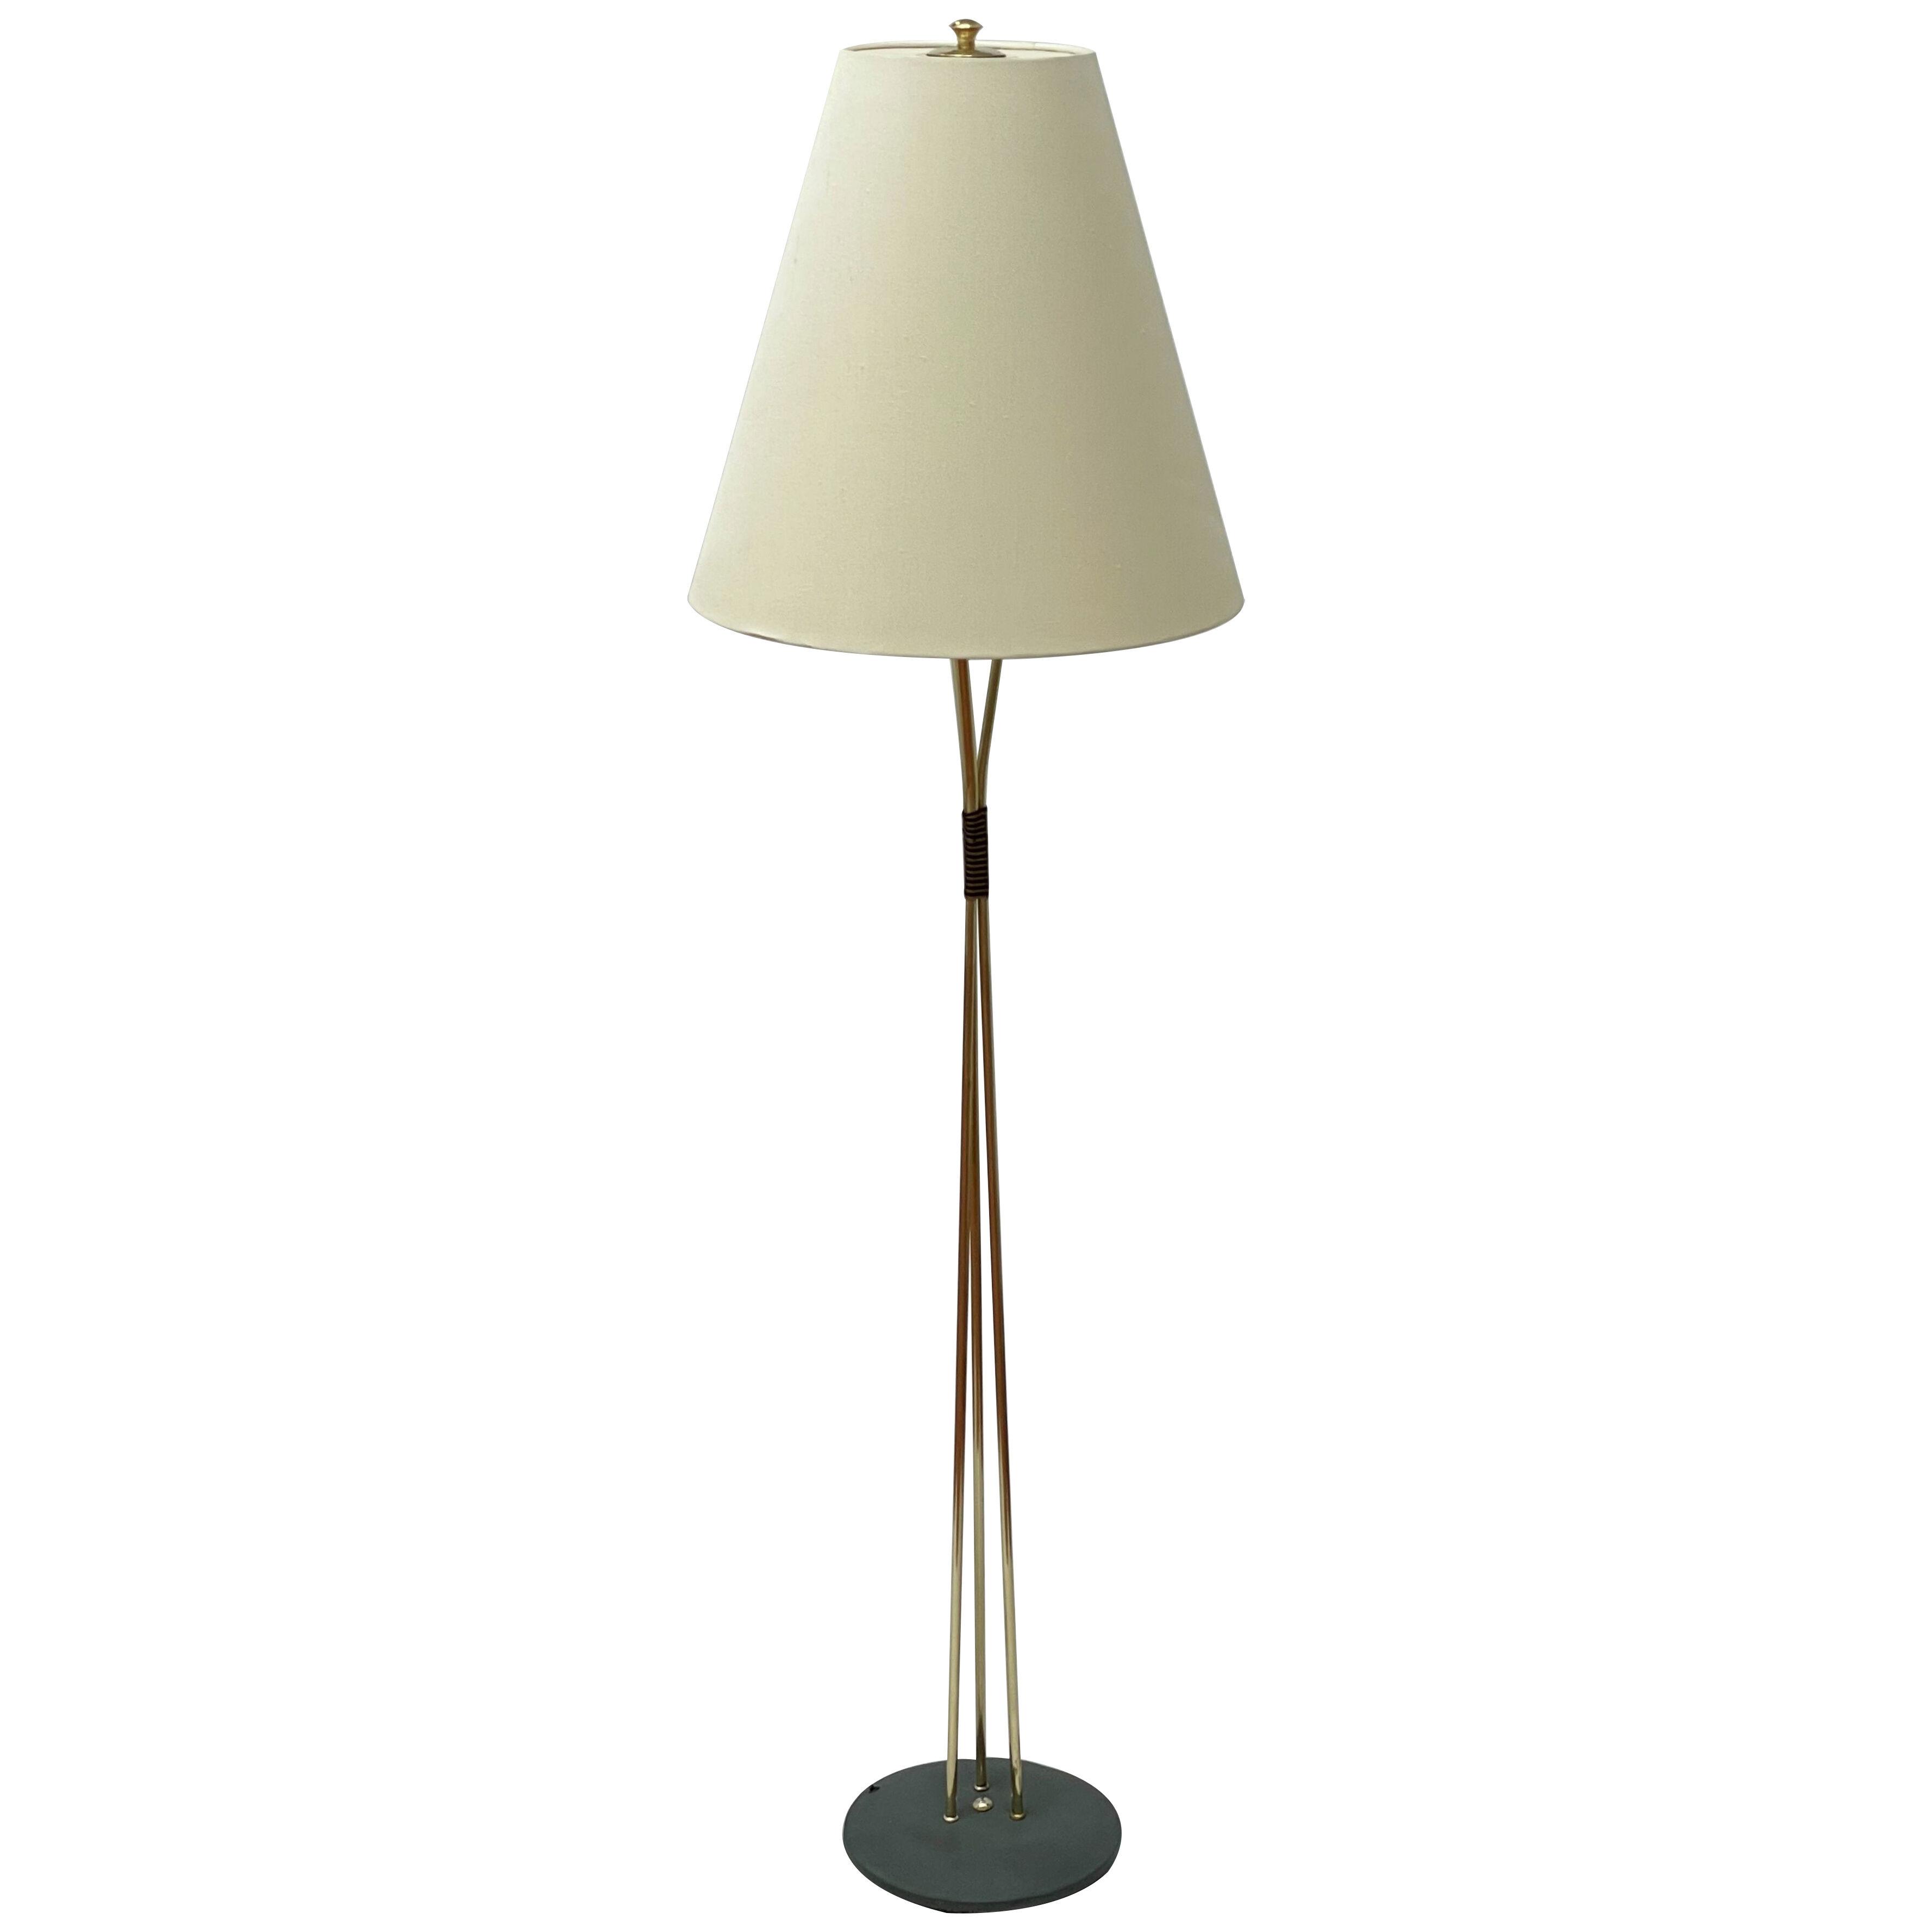 Brass tripod standard lamp